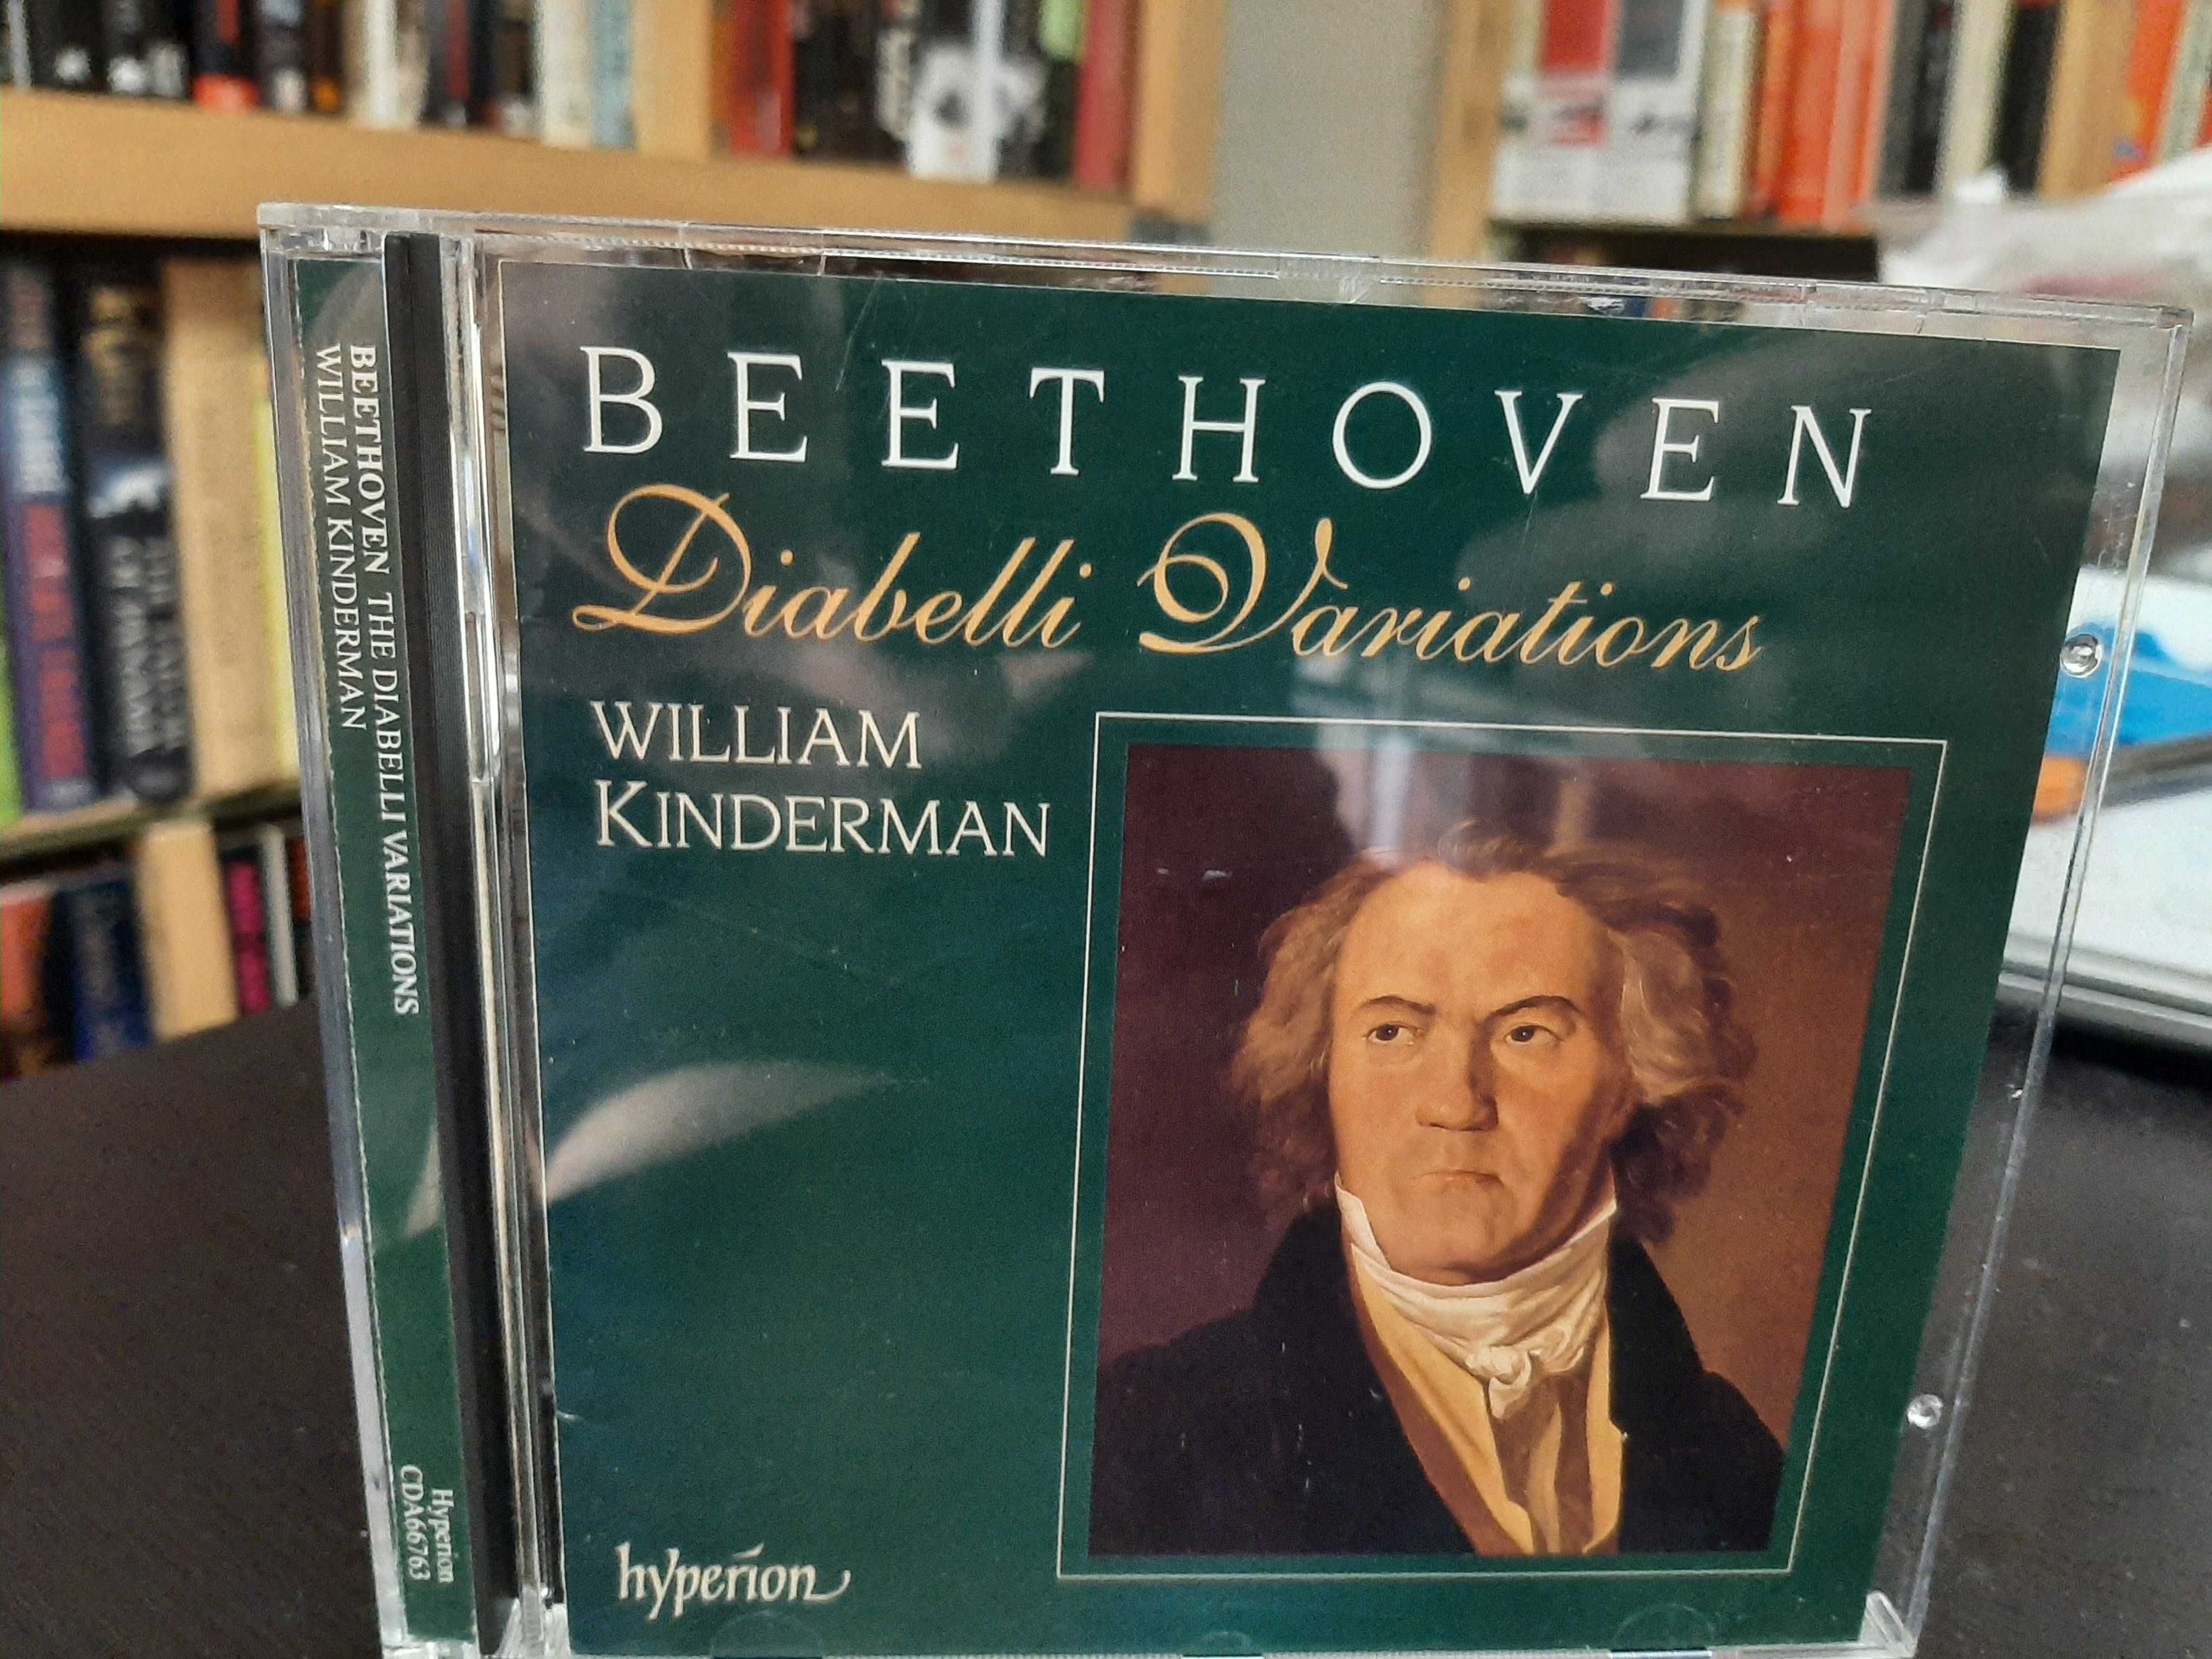 Beethoven - Diabelli Variations - William Kinderman - Hyperion